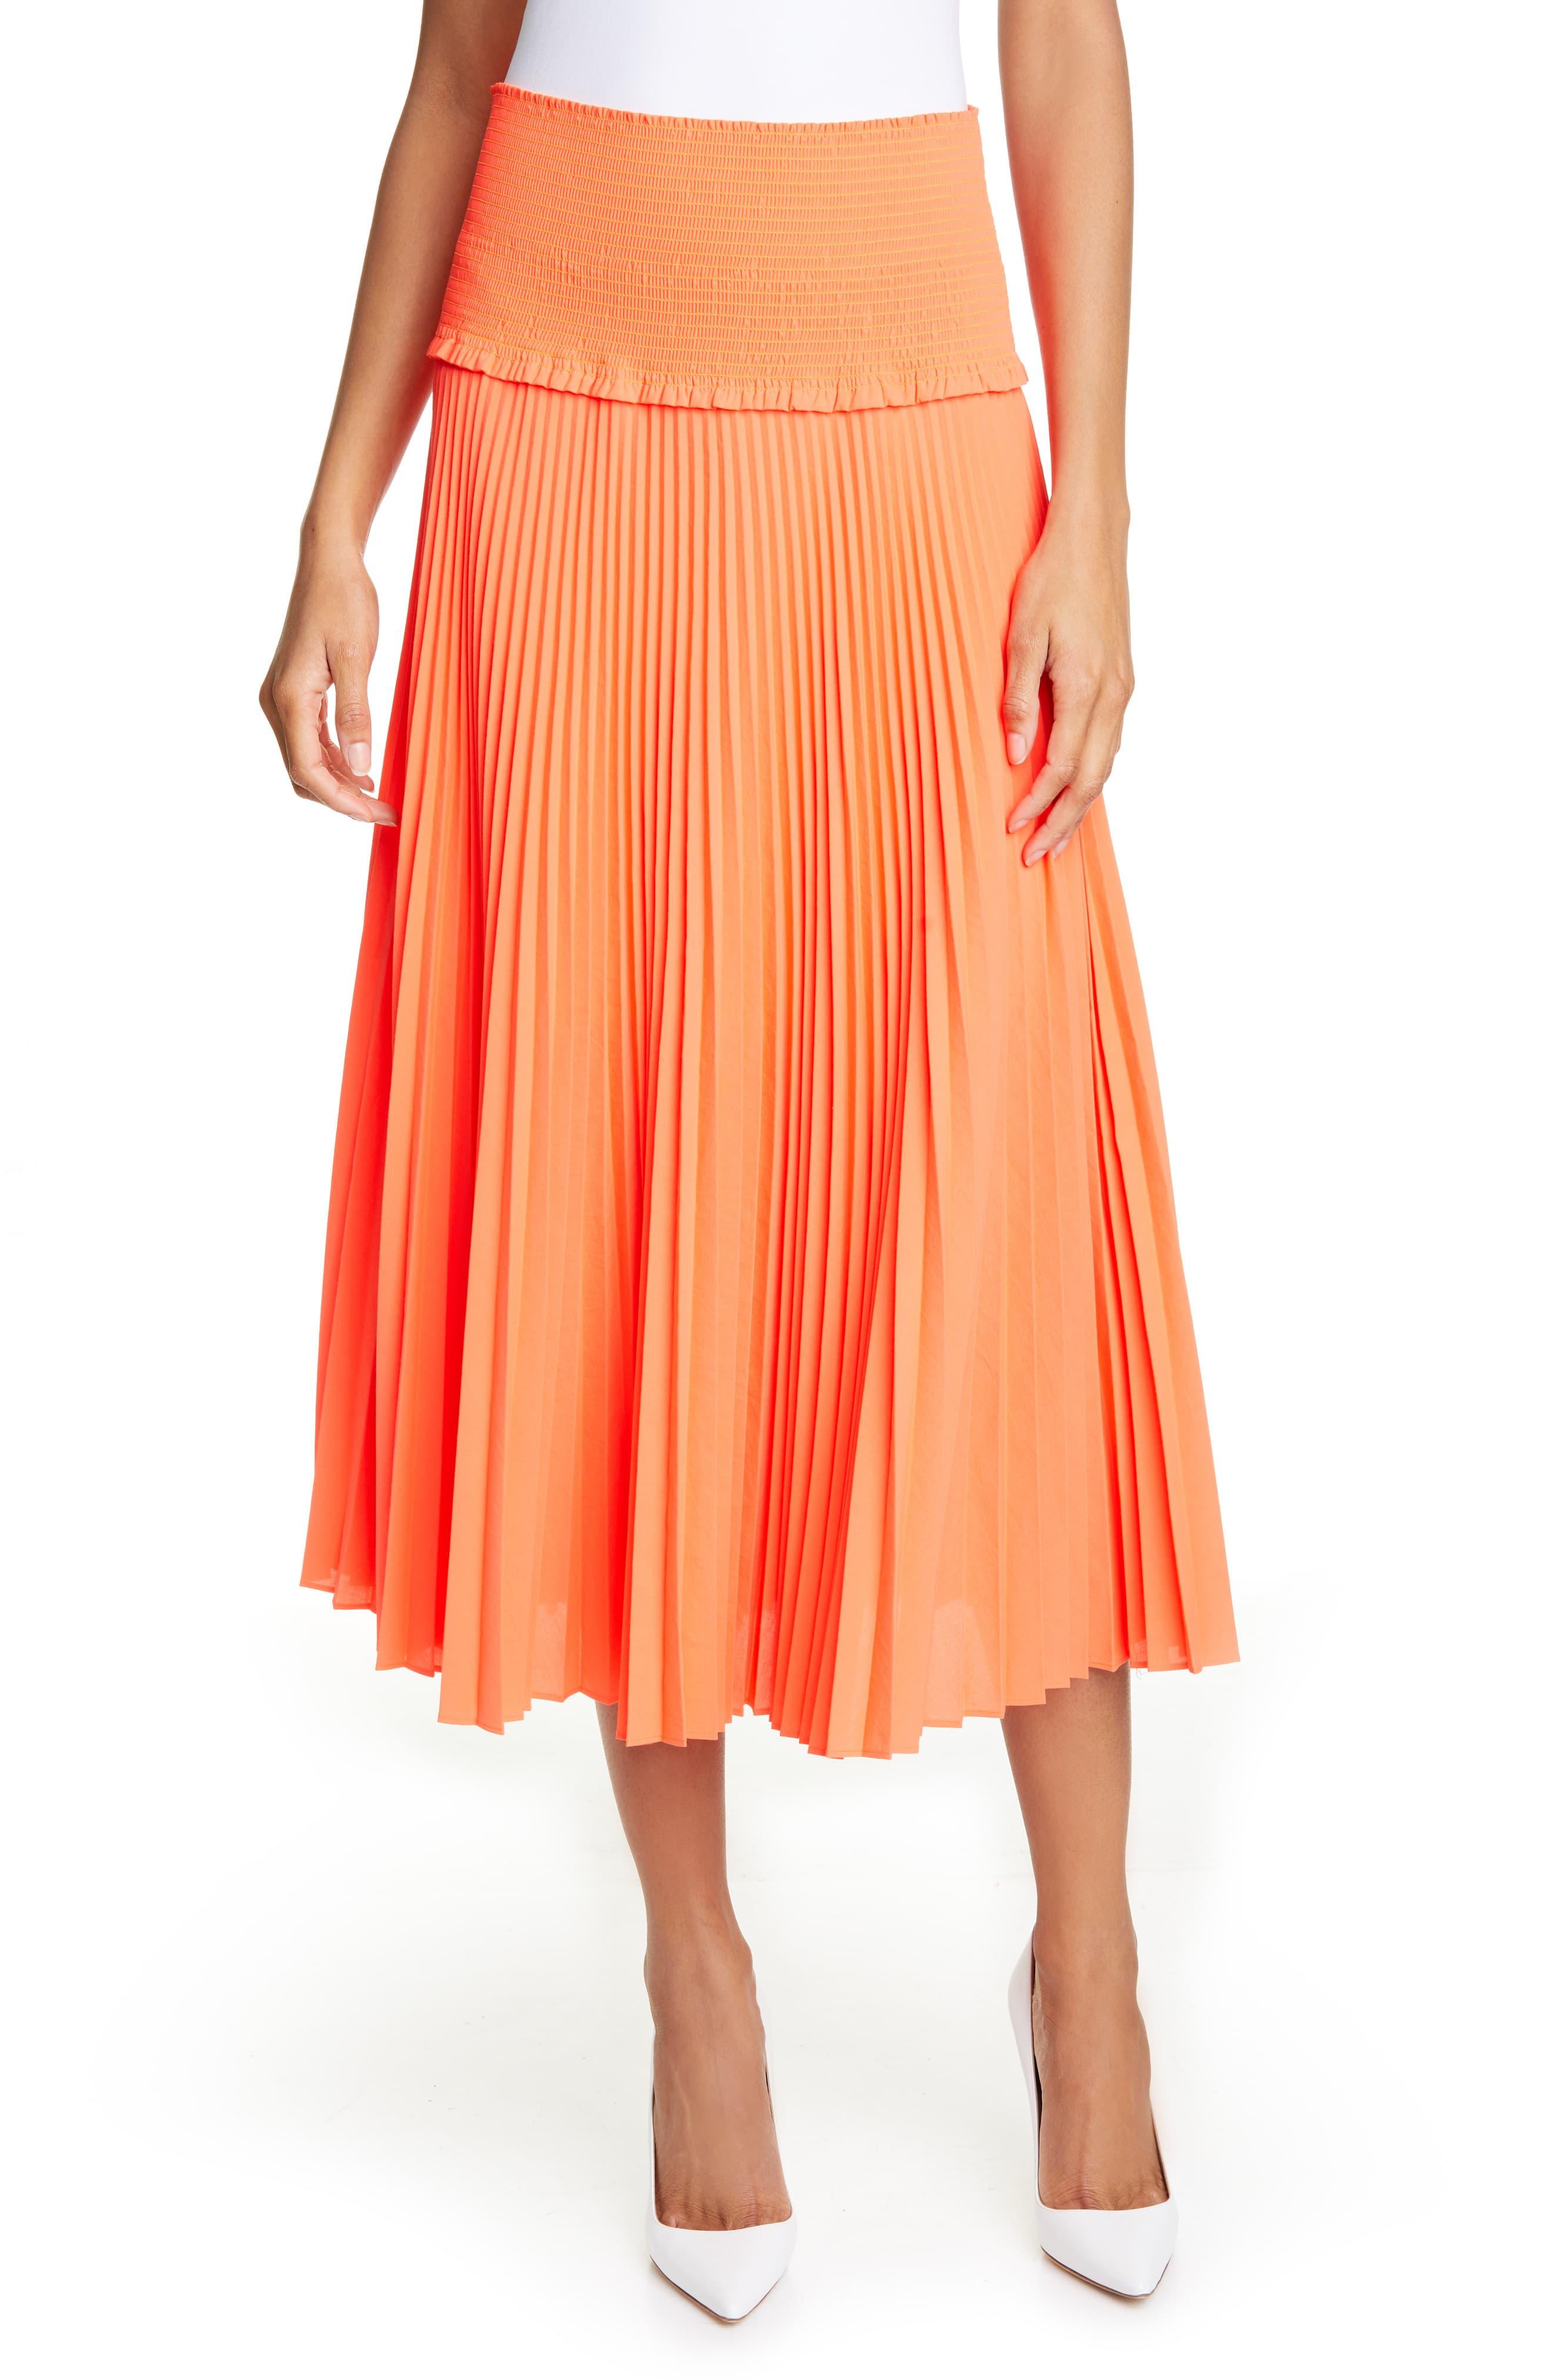 A.L.C. Hendrin Pleated A-line Midi Skirt in Orange - Lyst